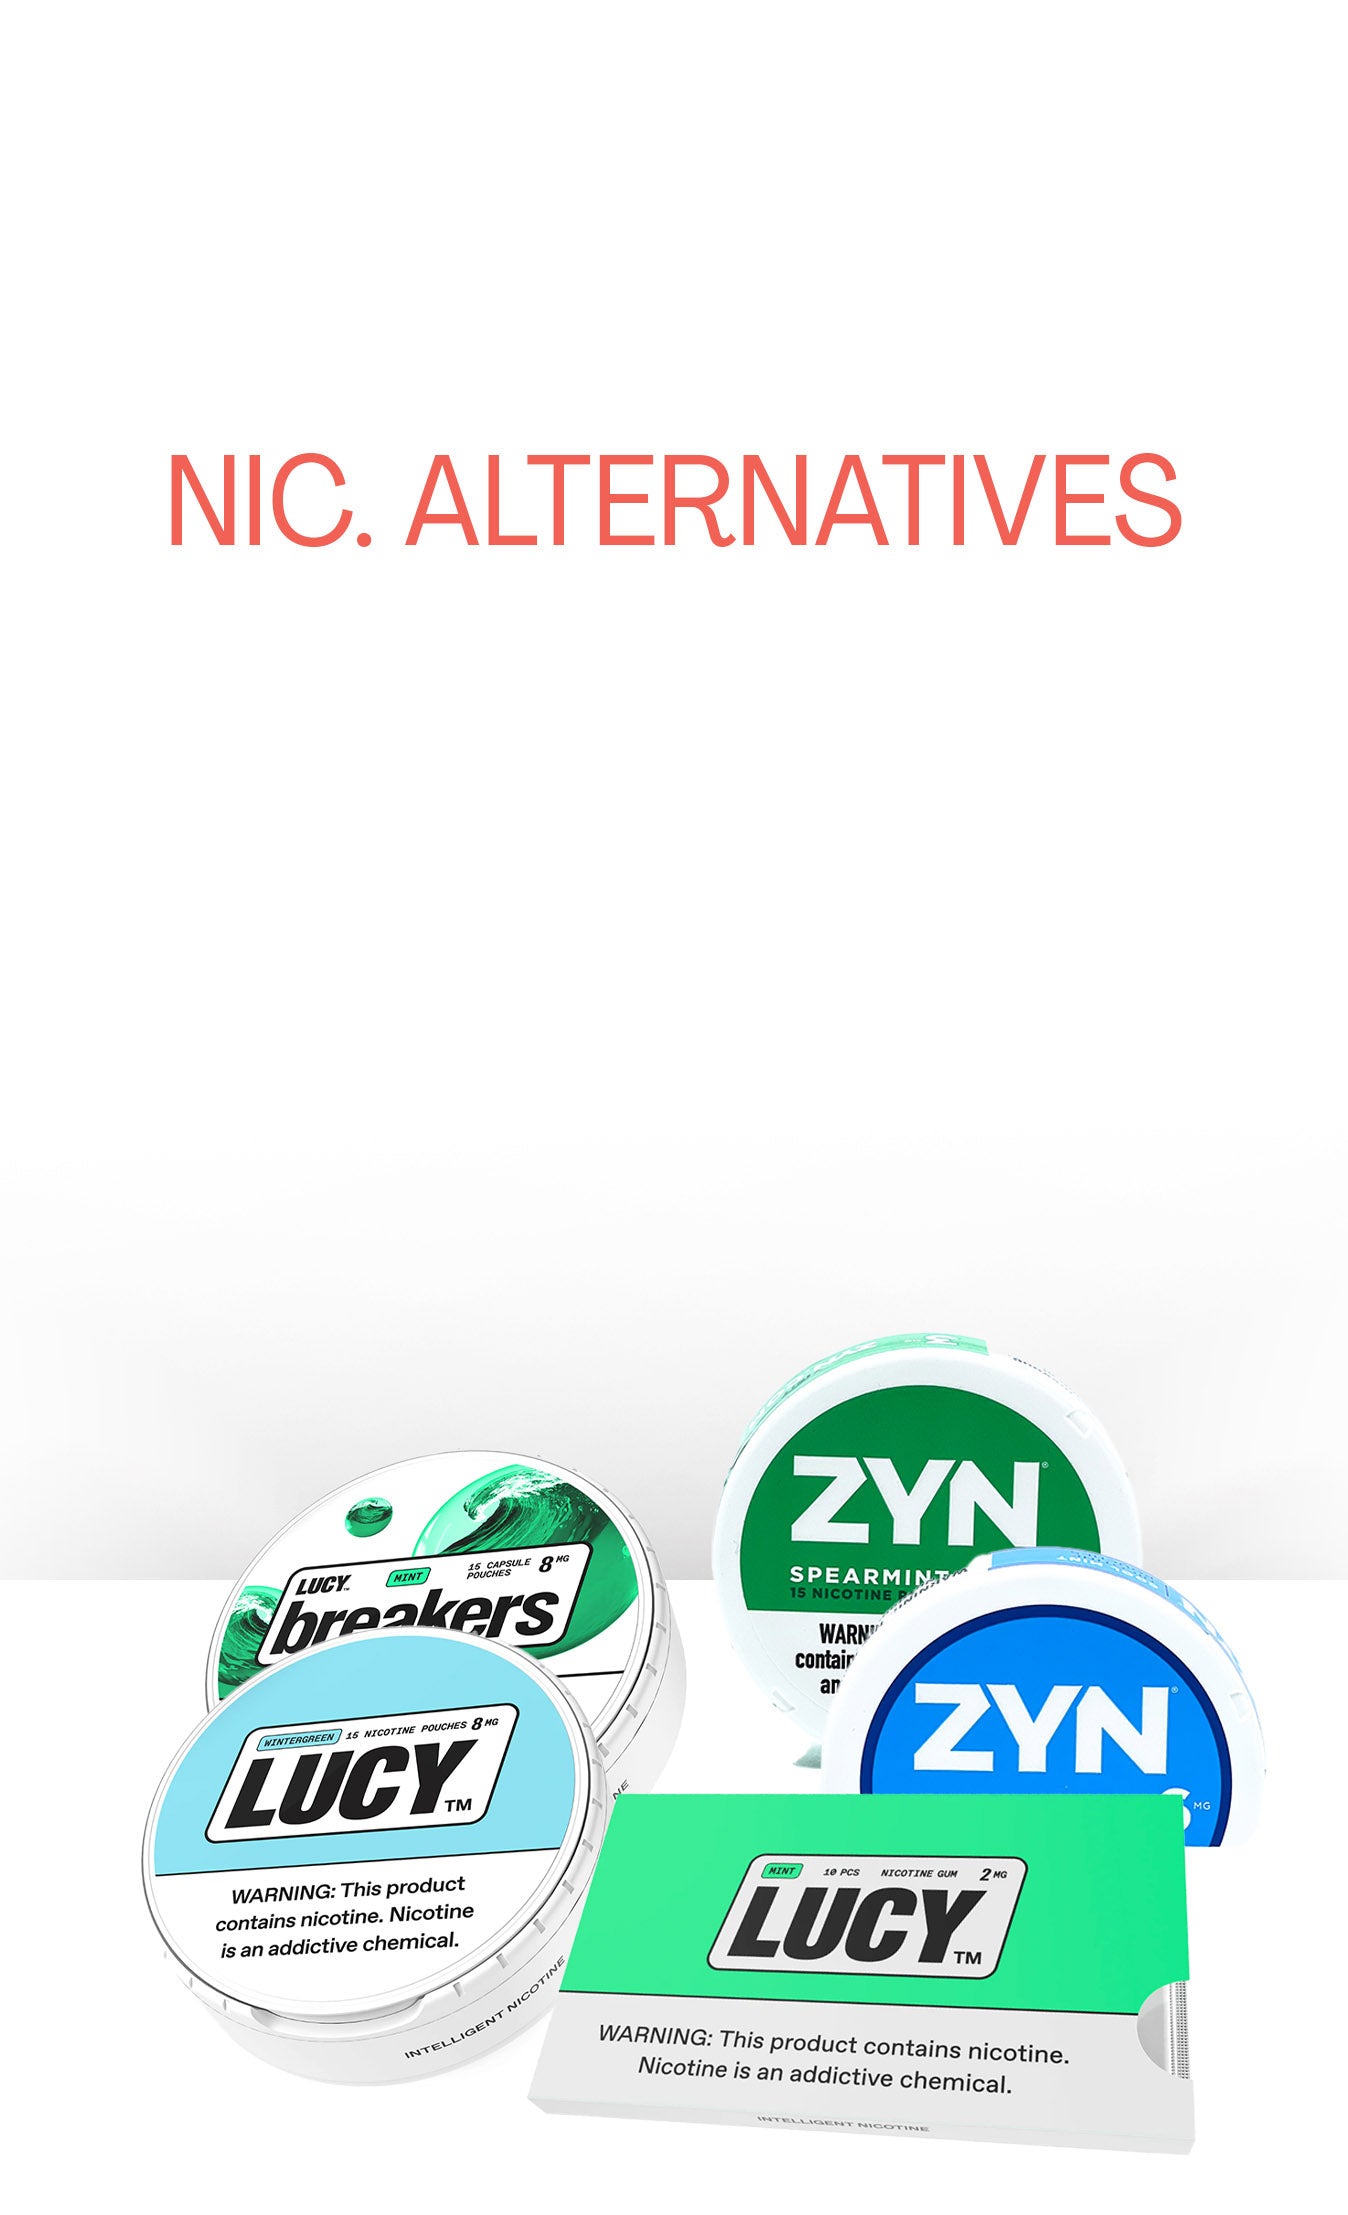 Nic. Alternatives